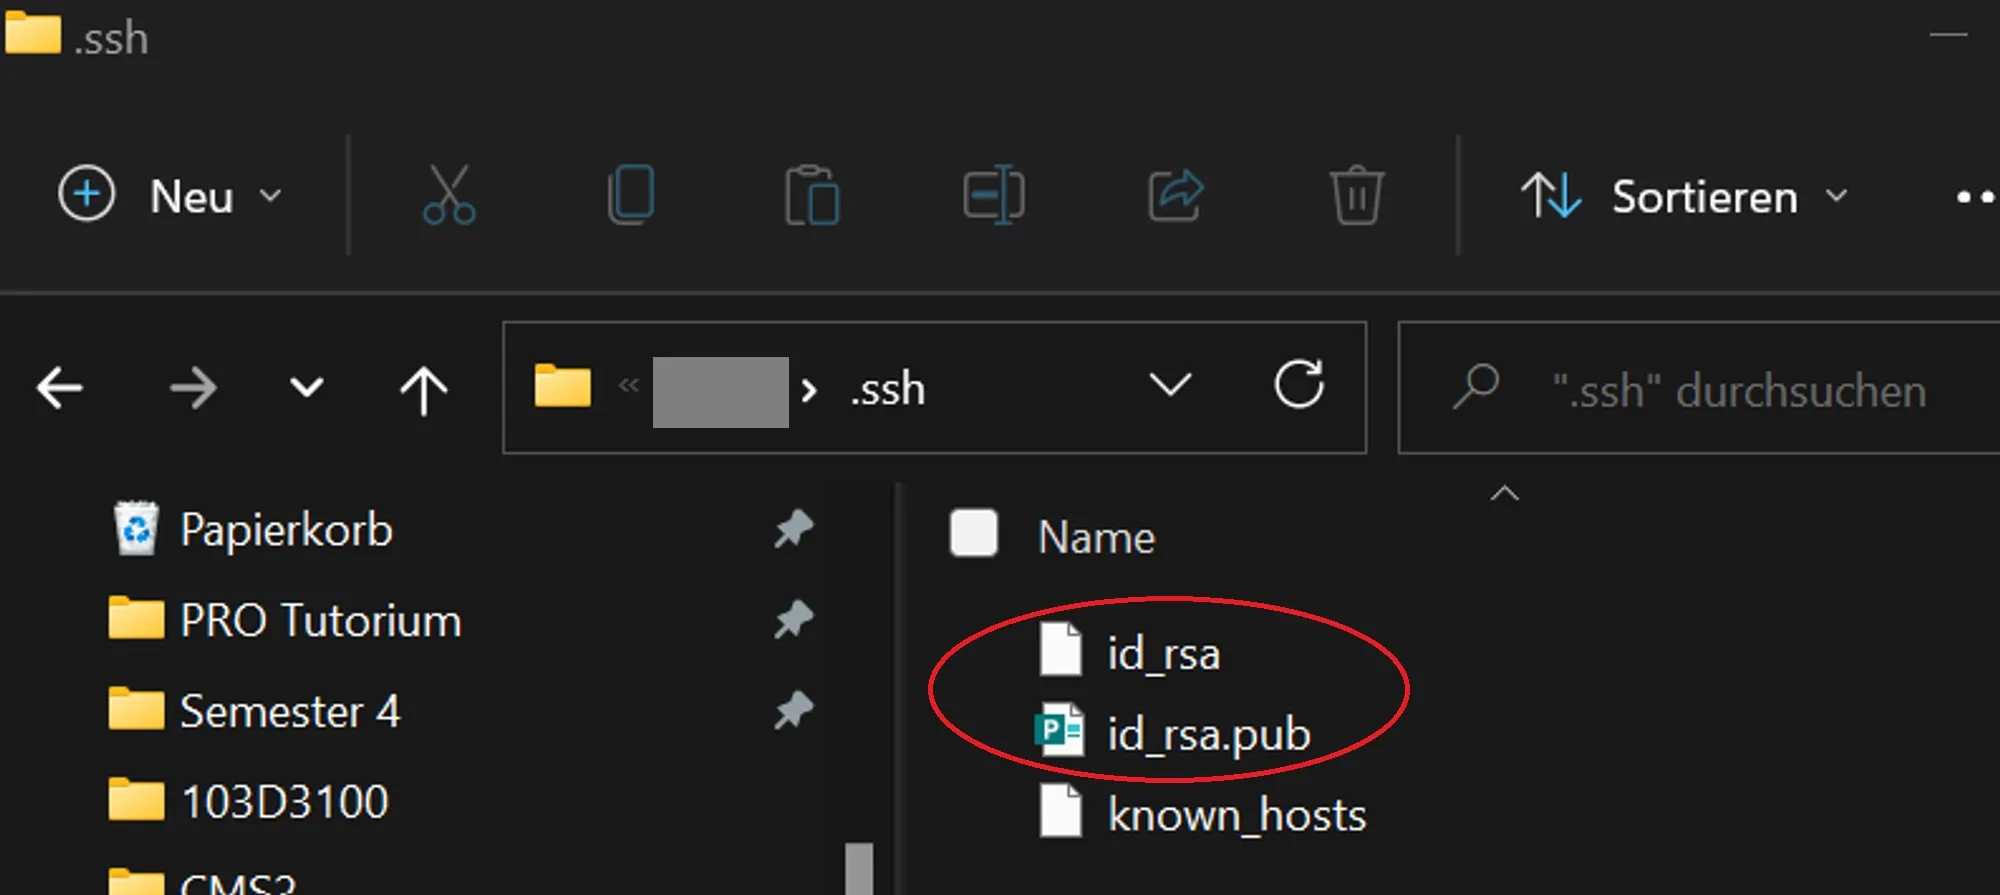 SSH Directory on Windows